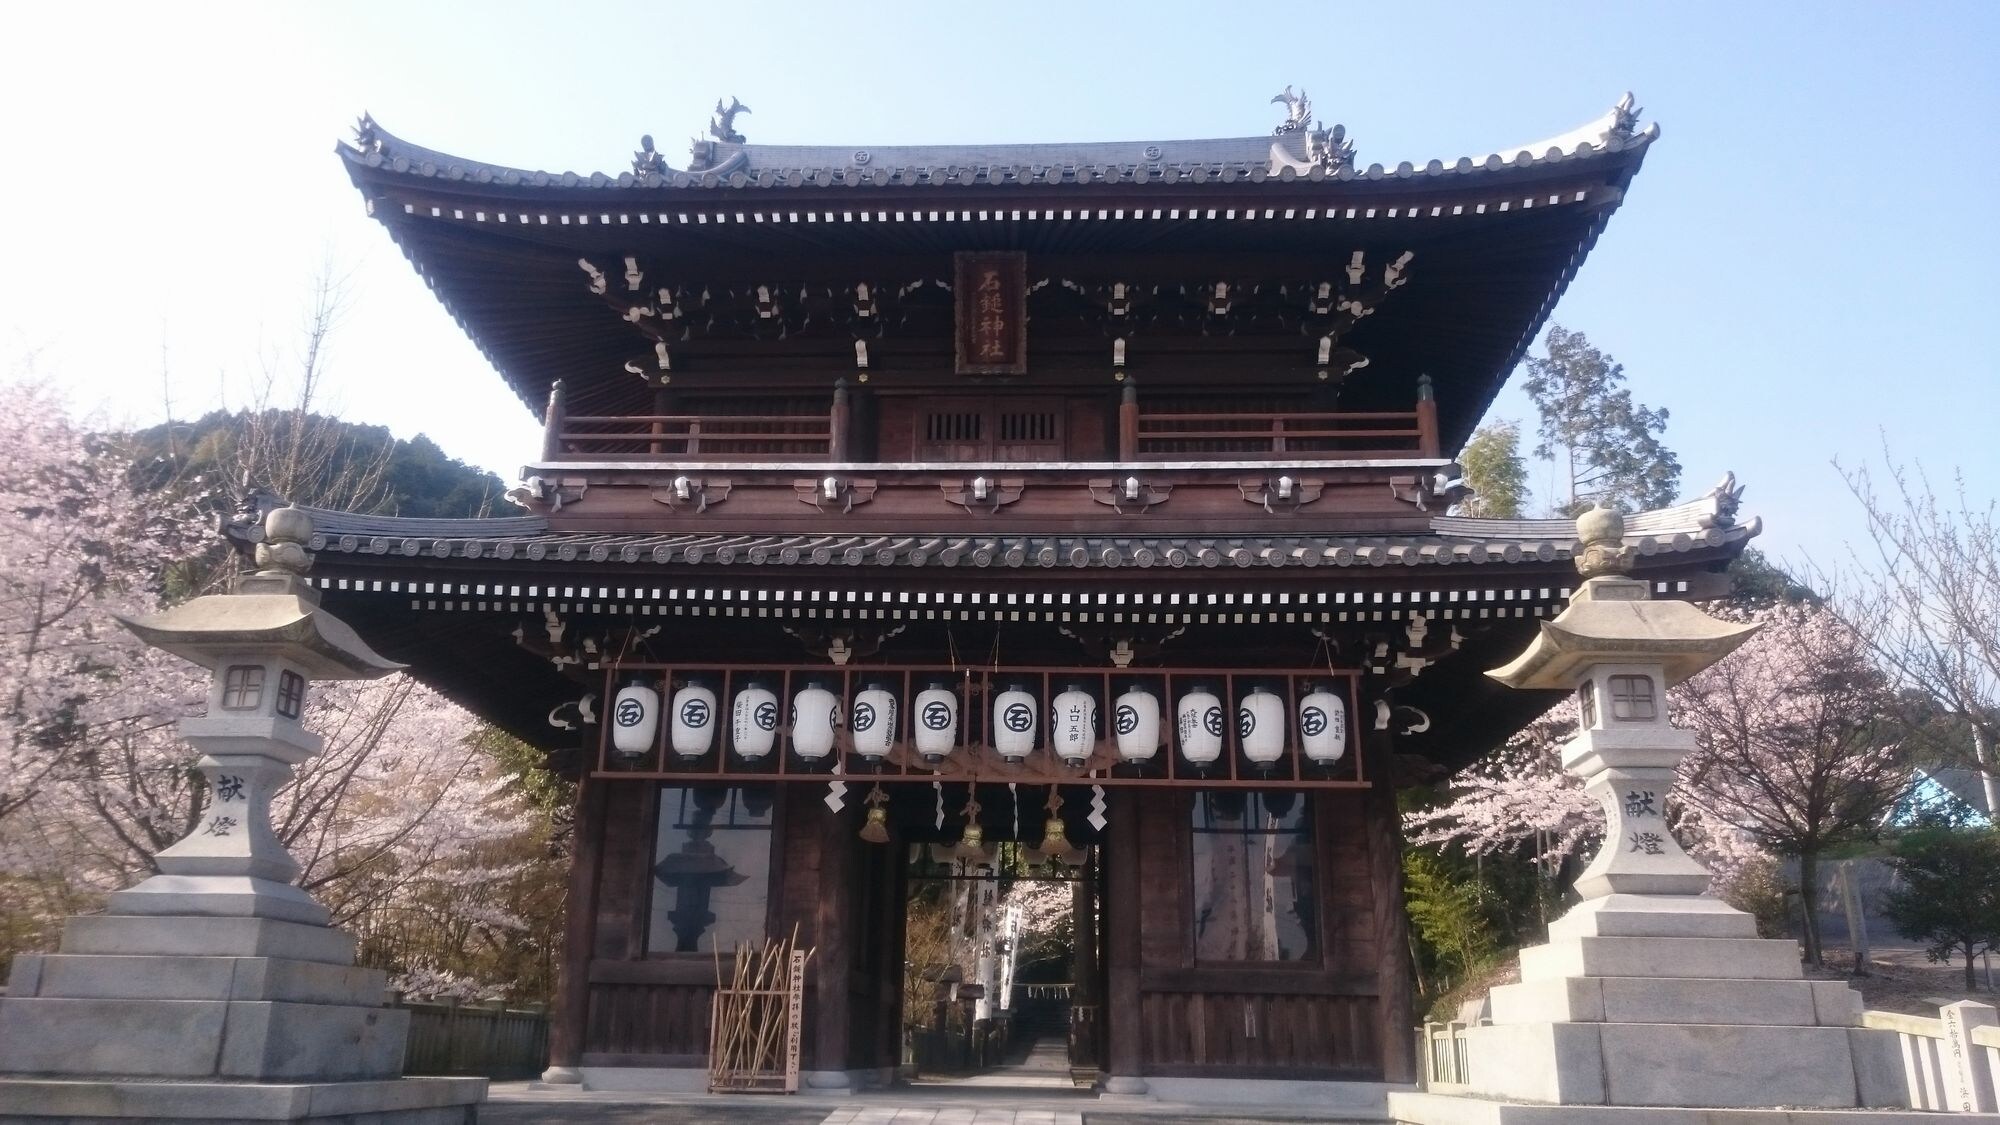 Ishizuchi Shrine Gate during the cherry blossom season